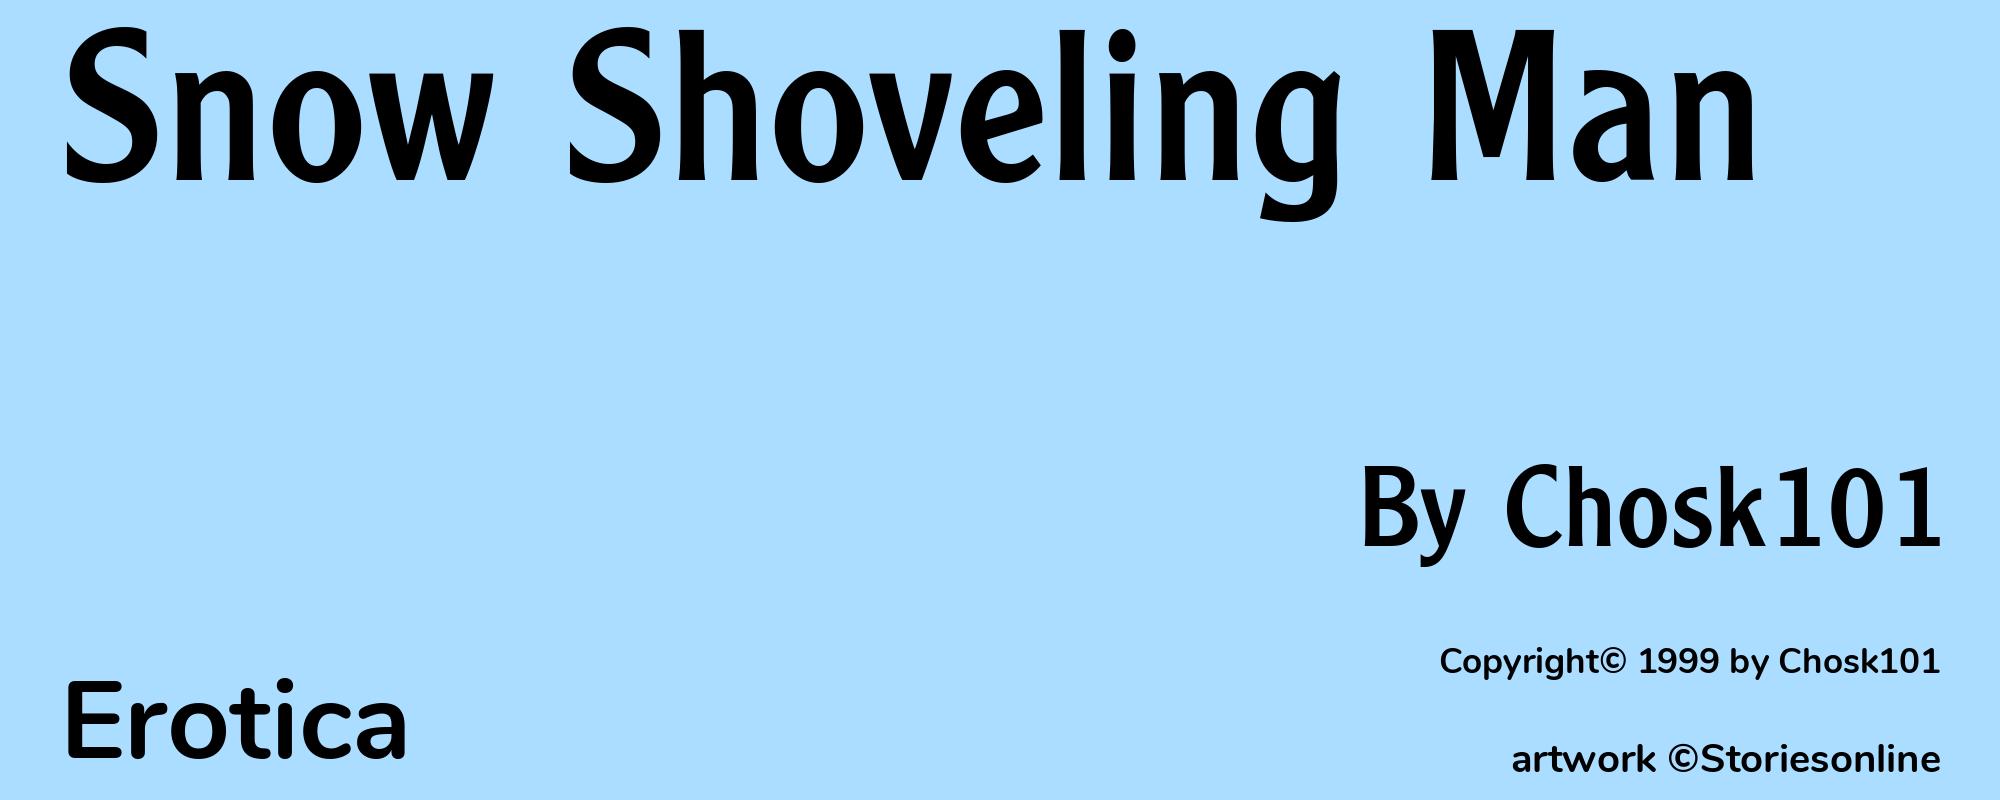 Snow Shoveling Man - Cover